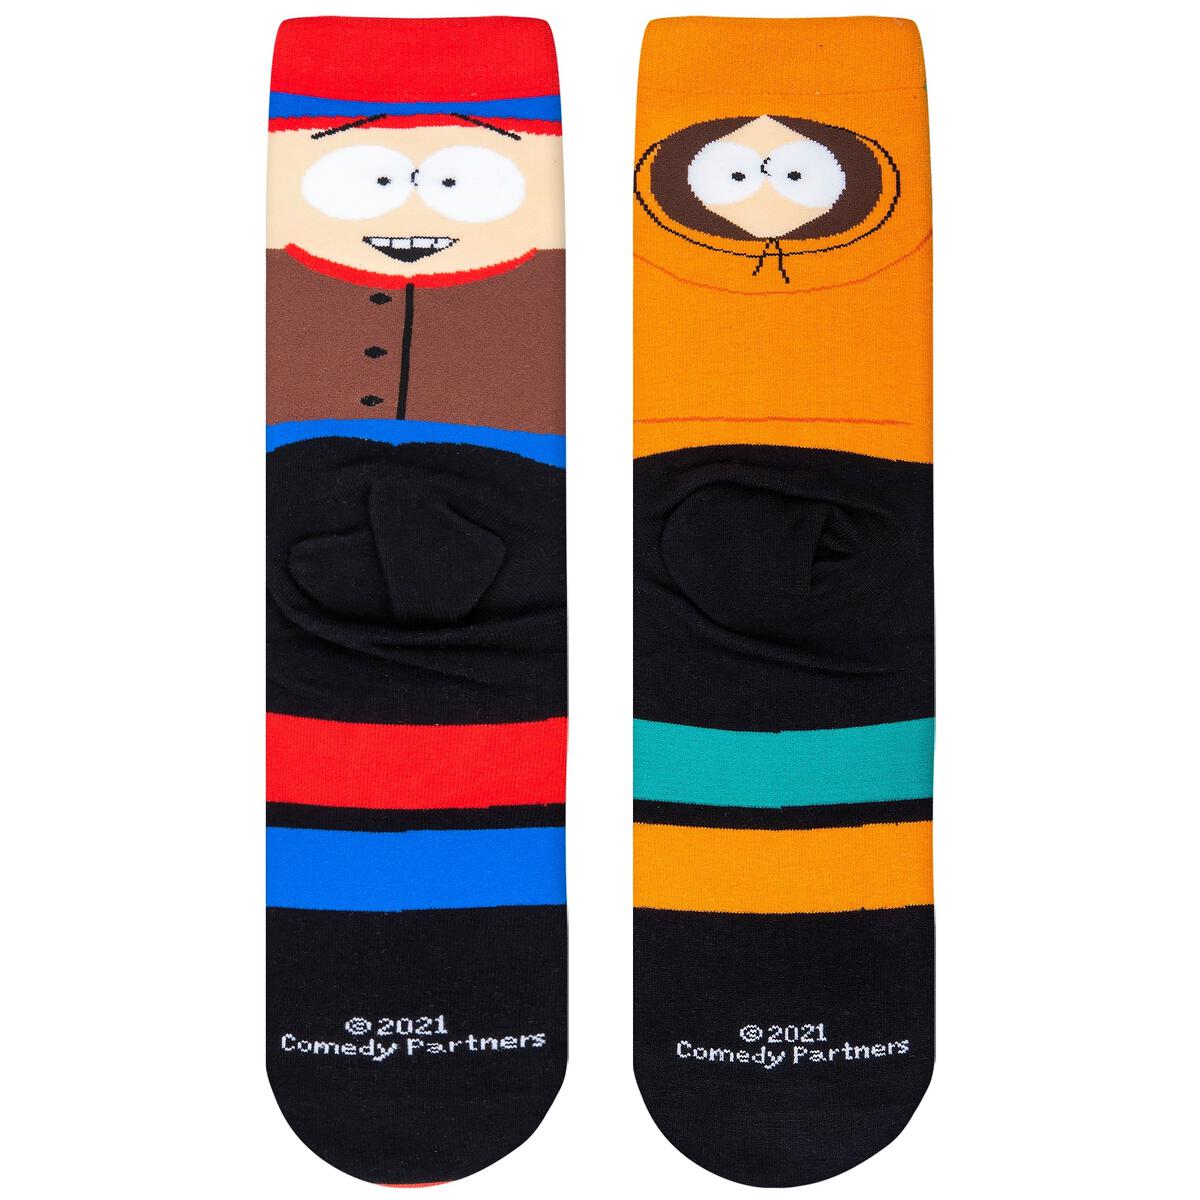 Odd Sox Men's Crew Socks - South Park Gang